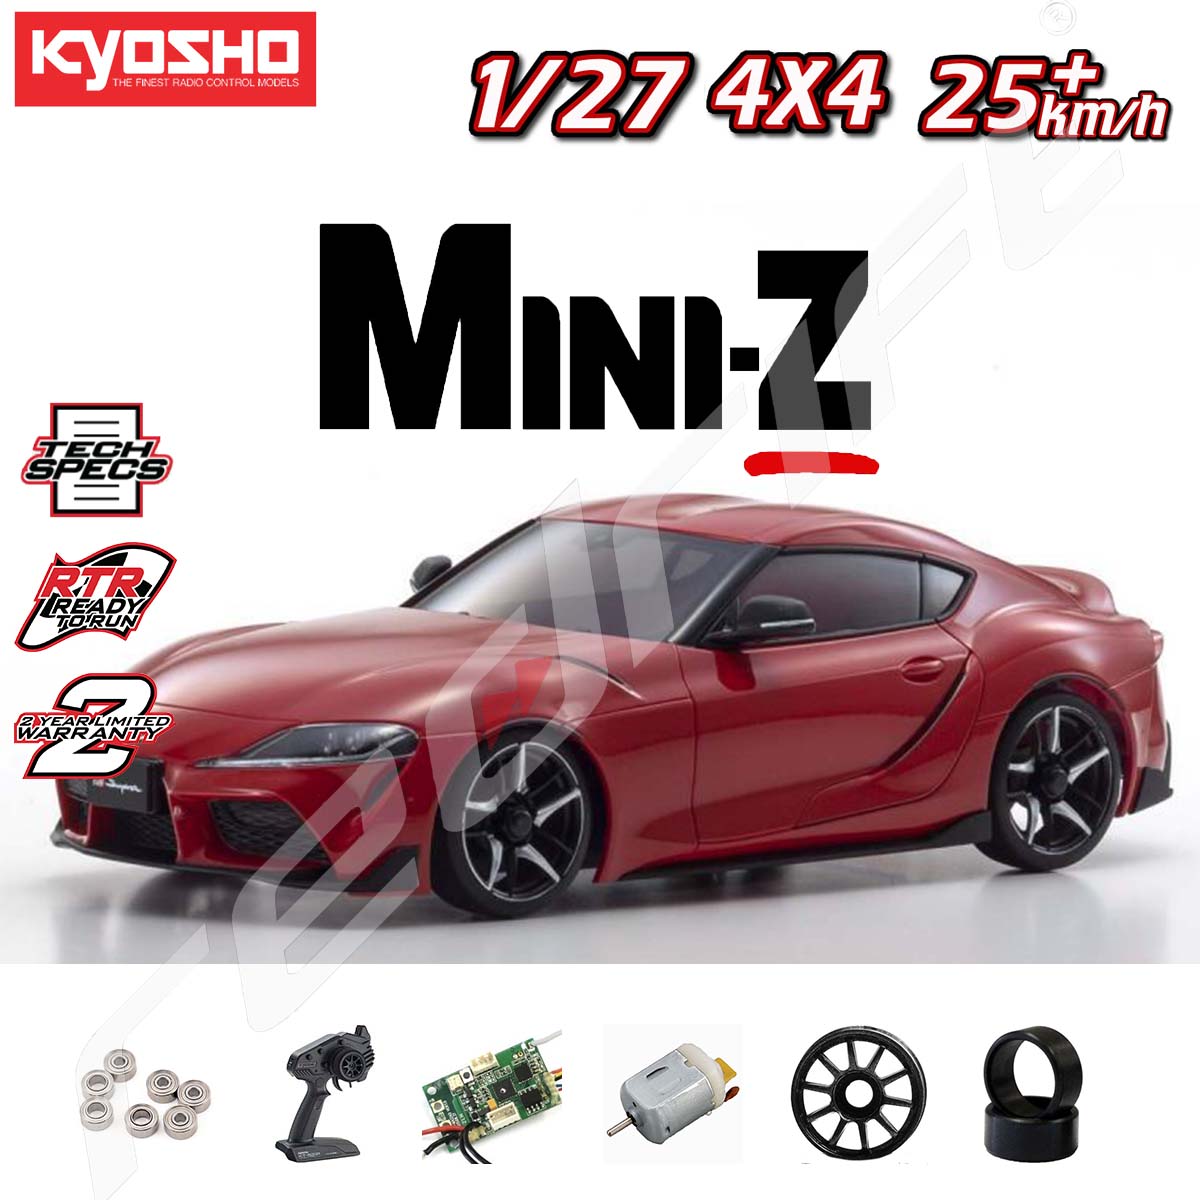 The BEST Mini RC Drift Car - Kyosho Mini Z 